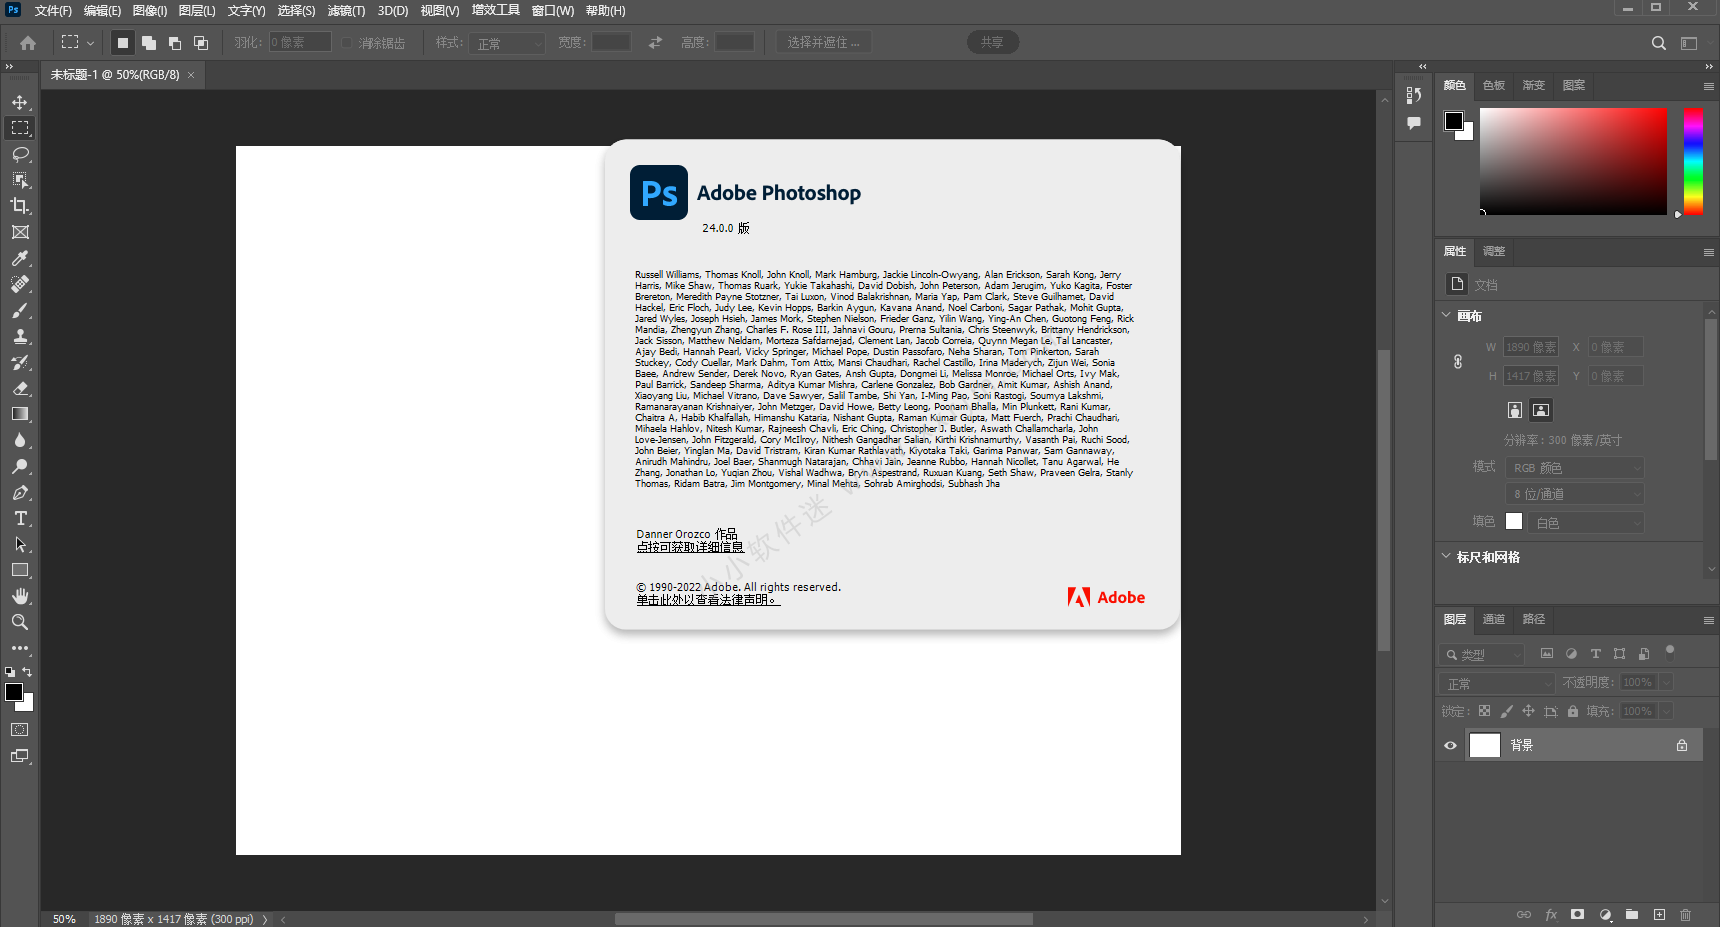 Adobe Photoshop 2023 v24.6.0.573 instal the last version for ios